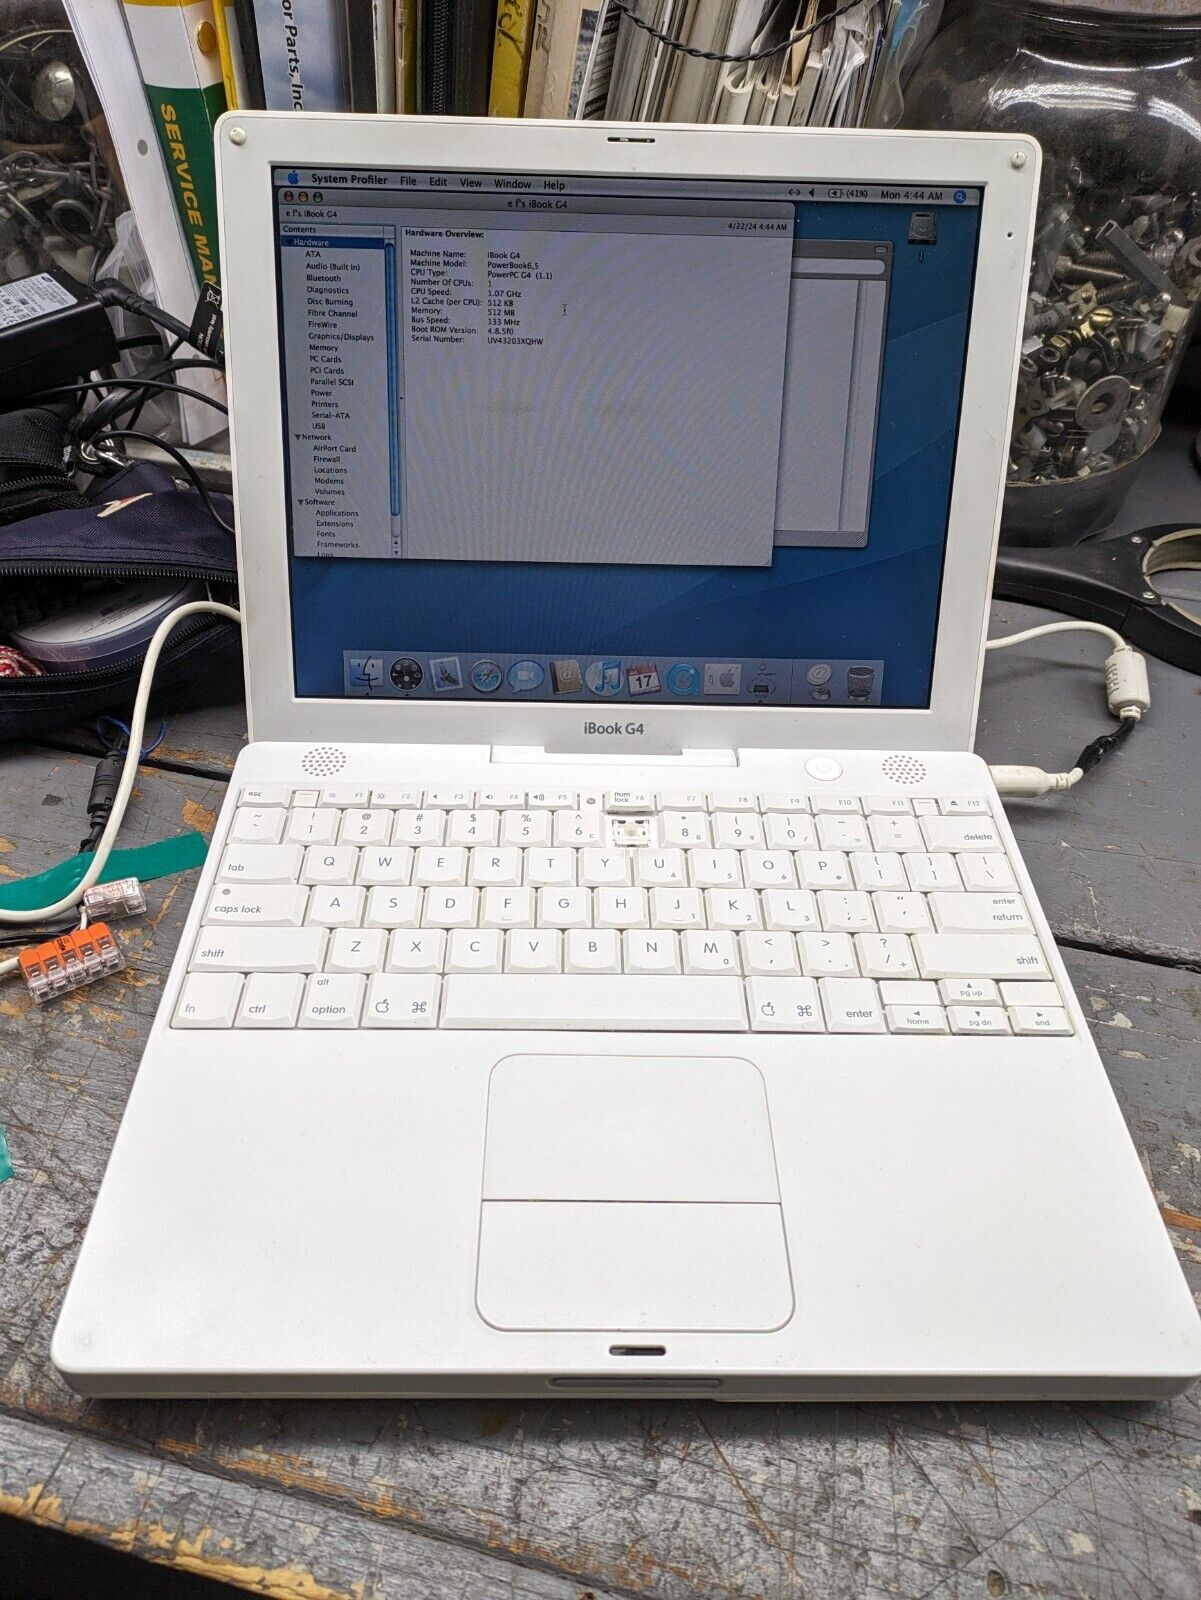 Apple iBook G4 12.1” Laptop - G4 1.07ghz | 512mb RAM | 30gb HDD | OS 10.4.11